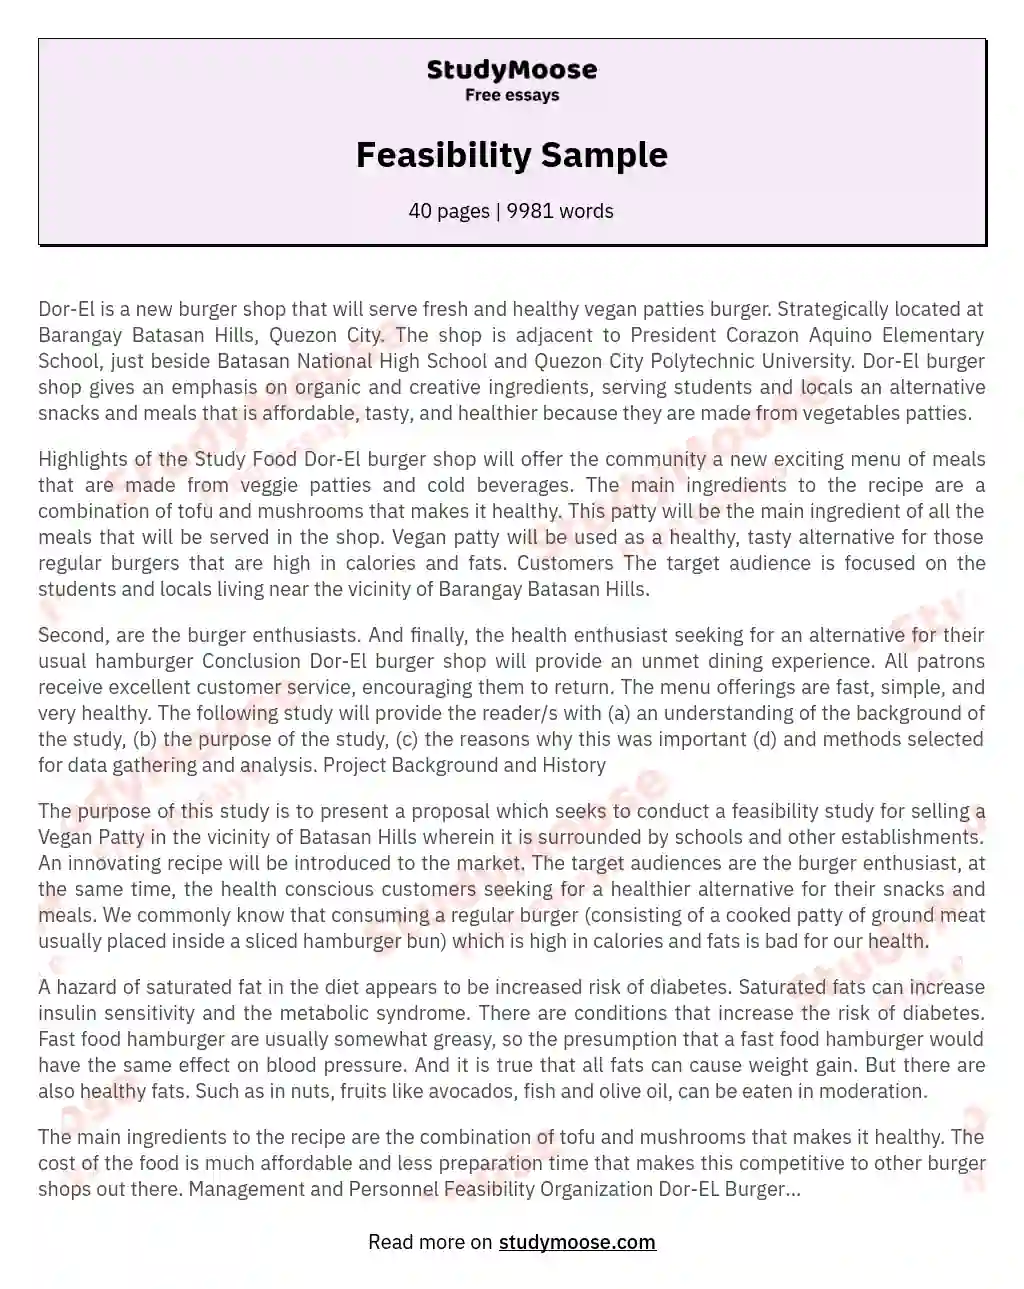 Feasibility Sample essay